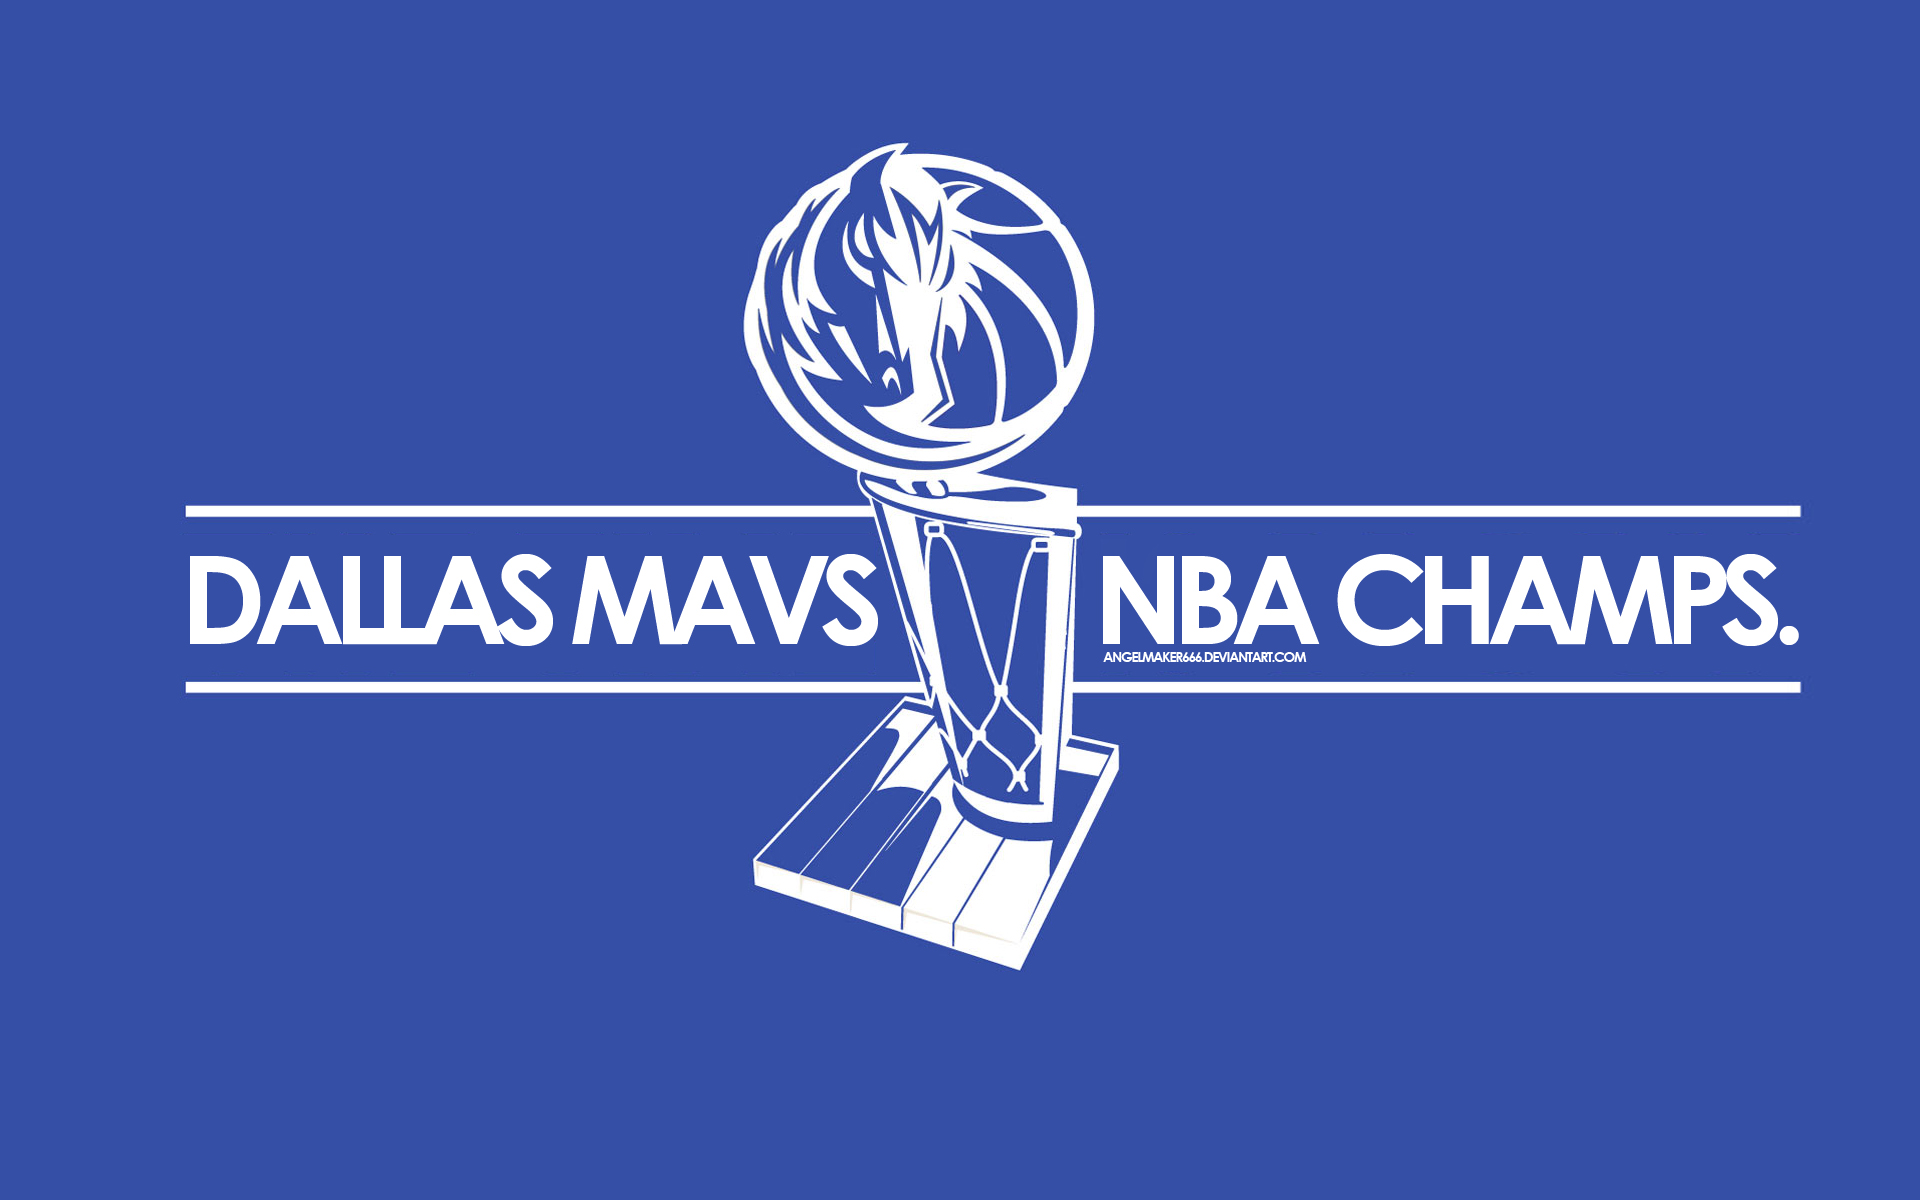 Dallas Mavericks Nba Champions Wallpaper Imagebank Biz